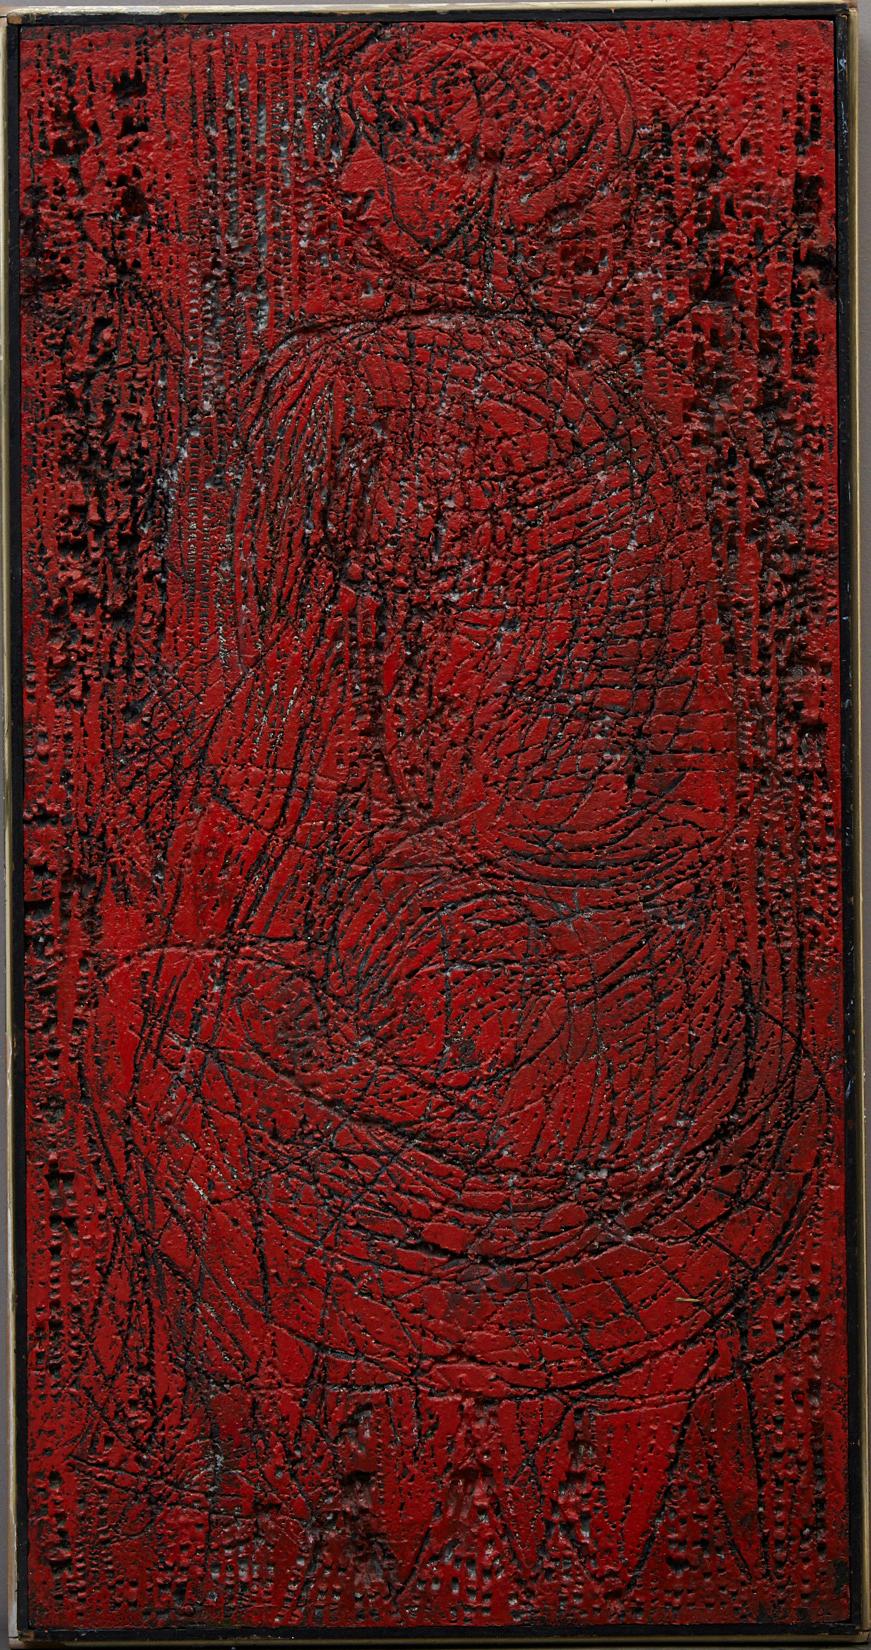 Red Seated Figure - Mixed Media Art by Sadie Hayms